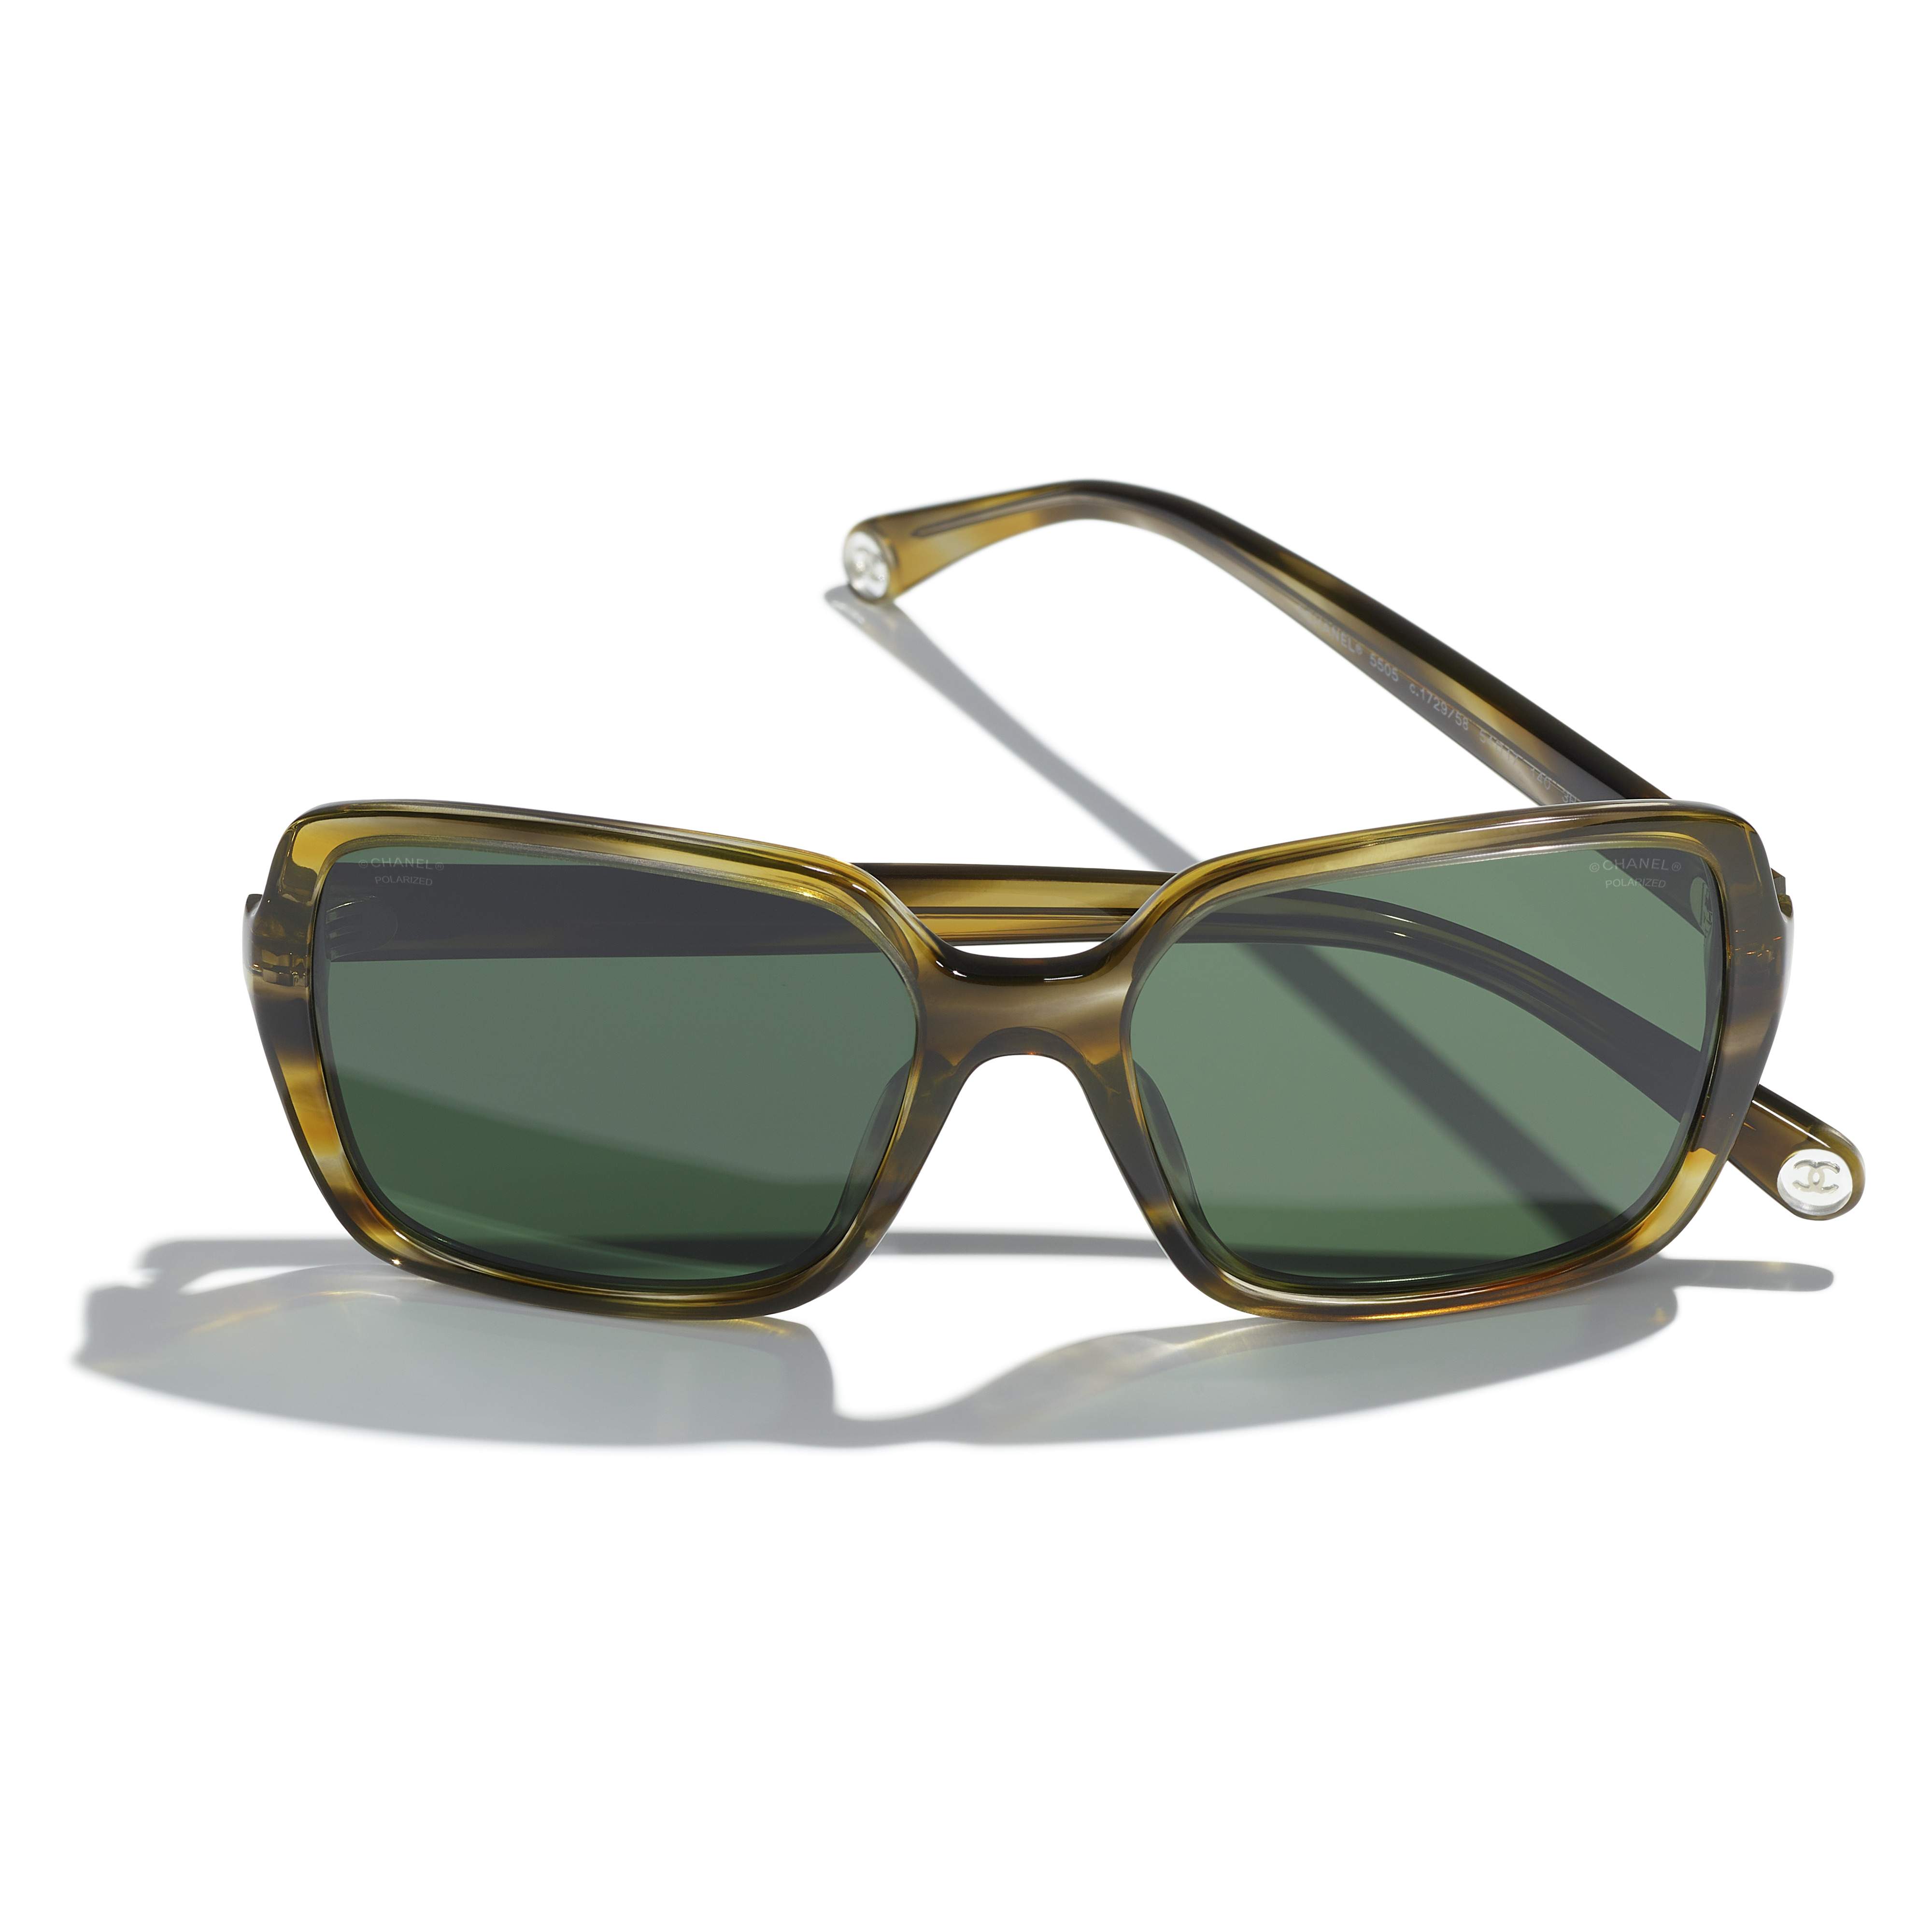 Sunglasses CHANEL CH5505 1729/58 54-17 Tortoise in stock